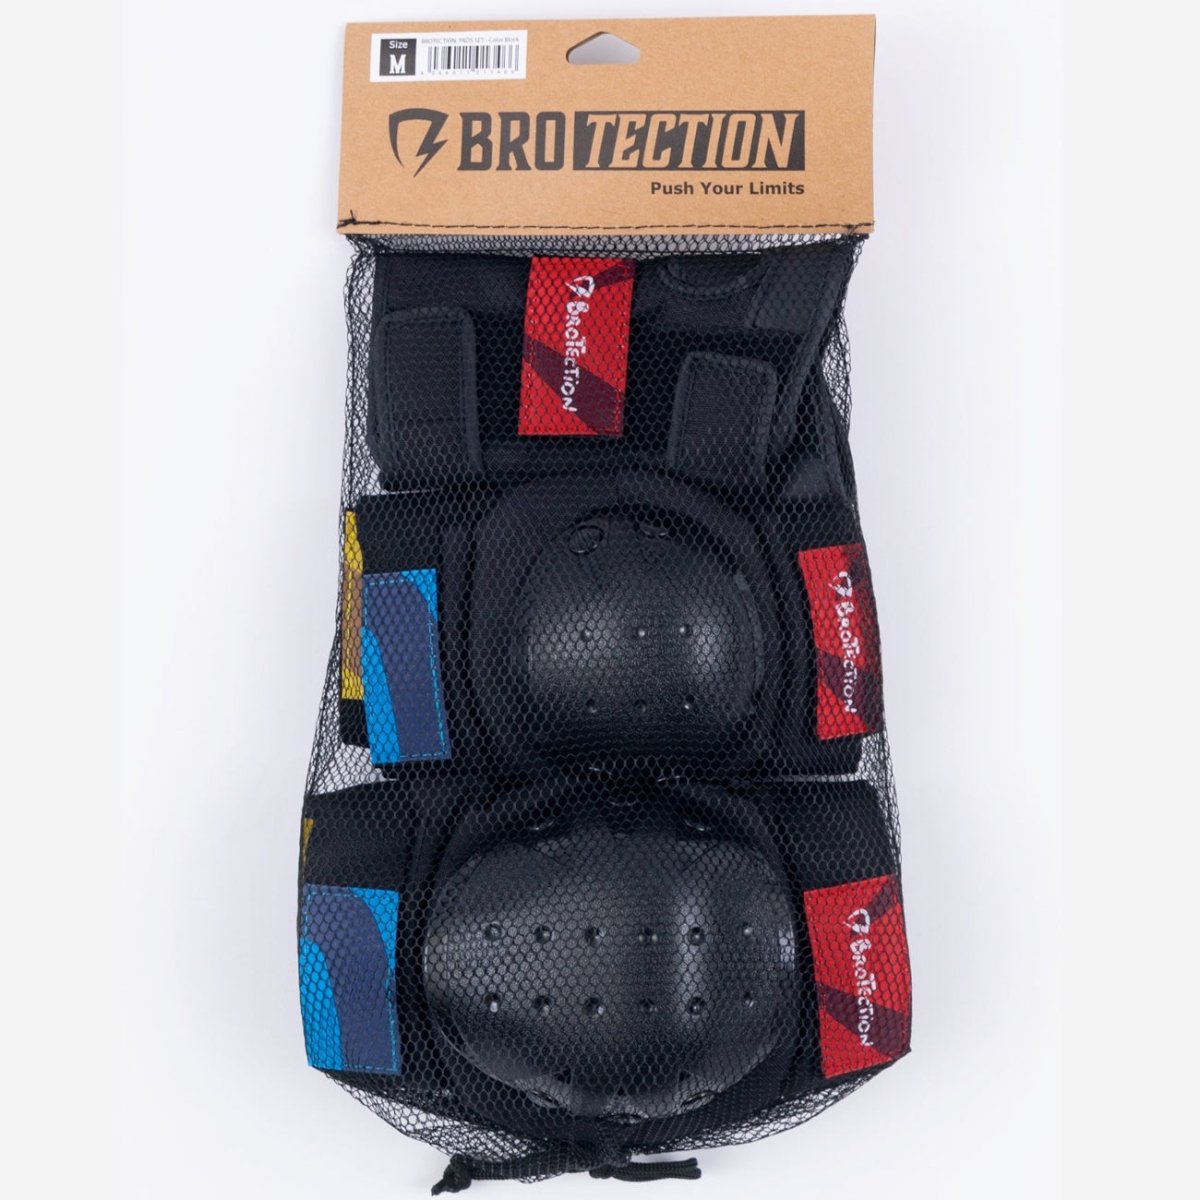 BroTection Schoner Basic Protection Set Color Block - Skateboarding-Schutzausrüstung - Rollbrett Mission